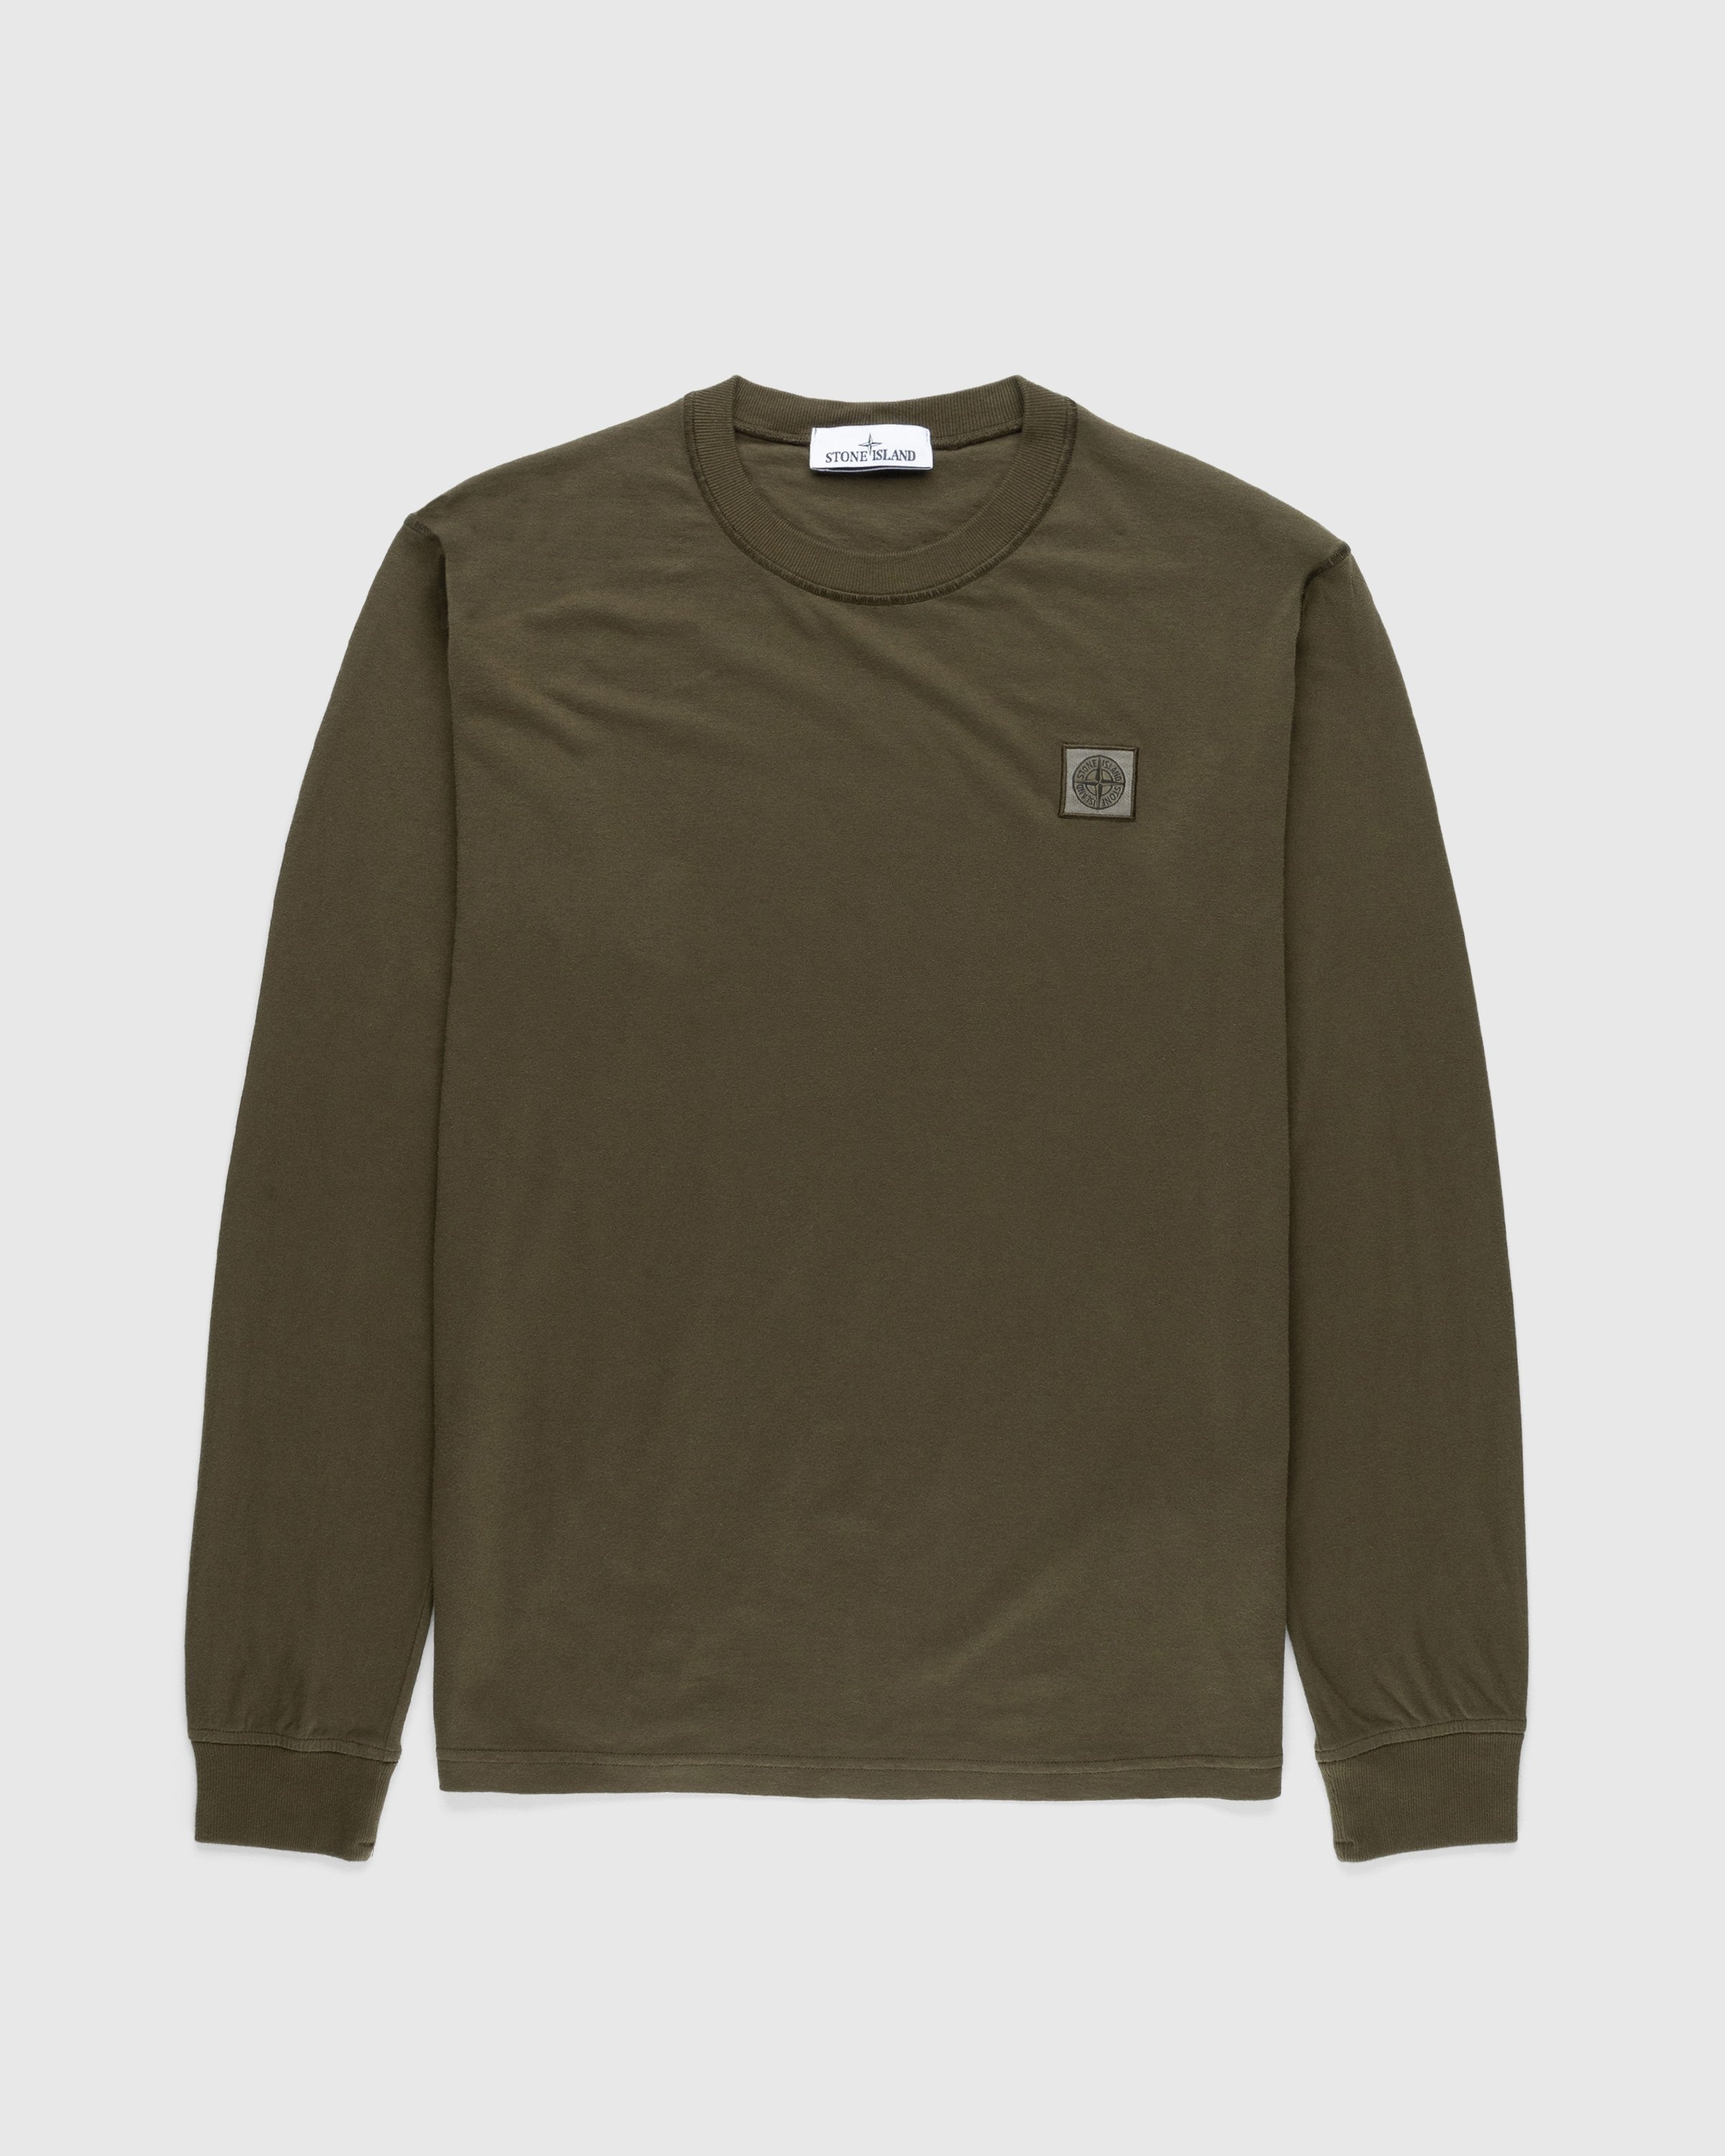 Stone Island – Fissato Longsleeve T-Shirt Olive - T-shirts - Green - Image 1